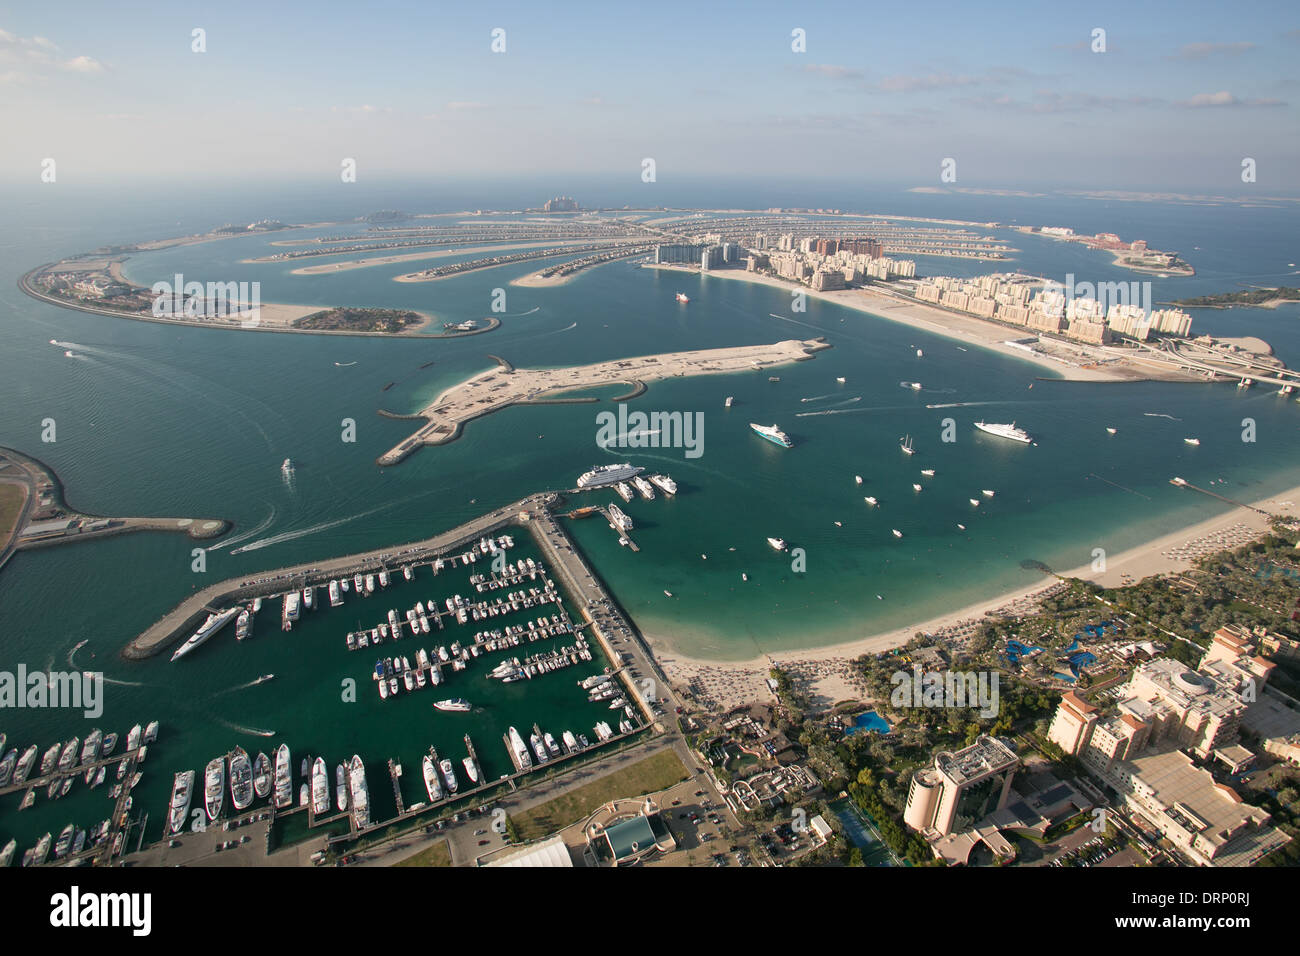 Aerial photo of Dubai in UAE showing Palm Jumeirah, Dubai International Marine Club and Stock Photo